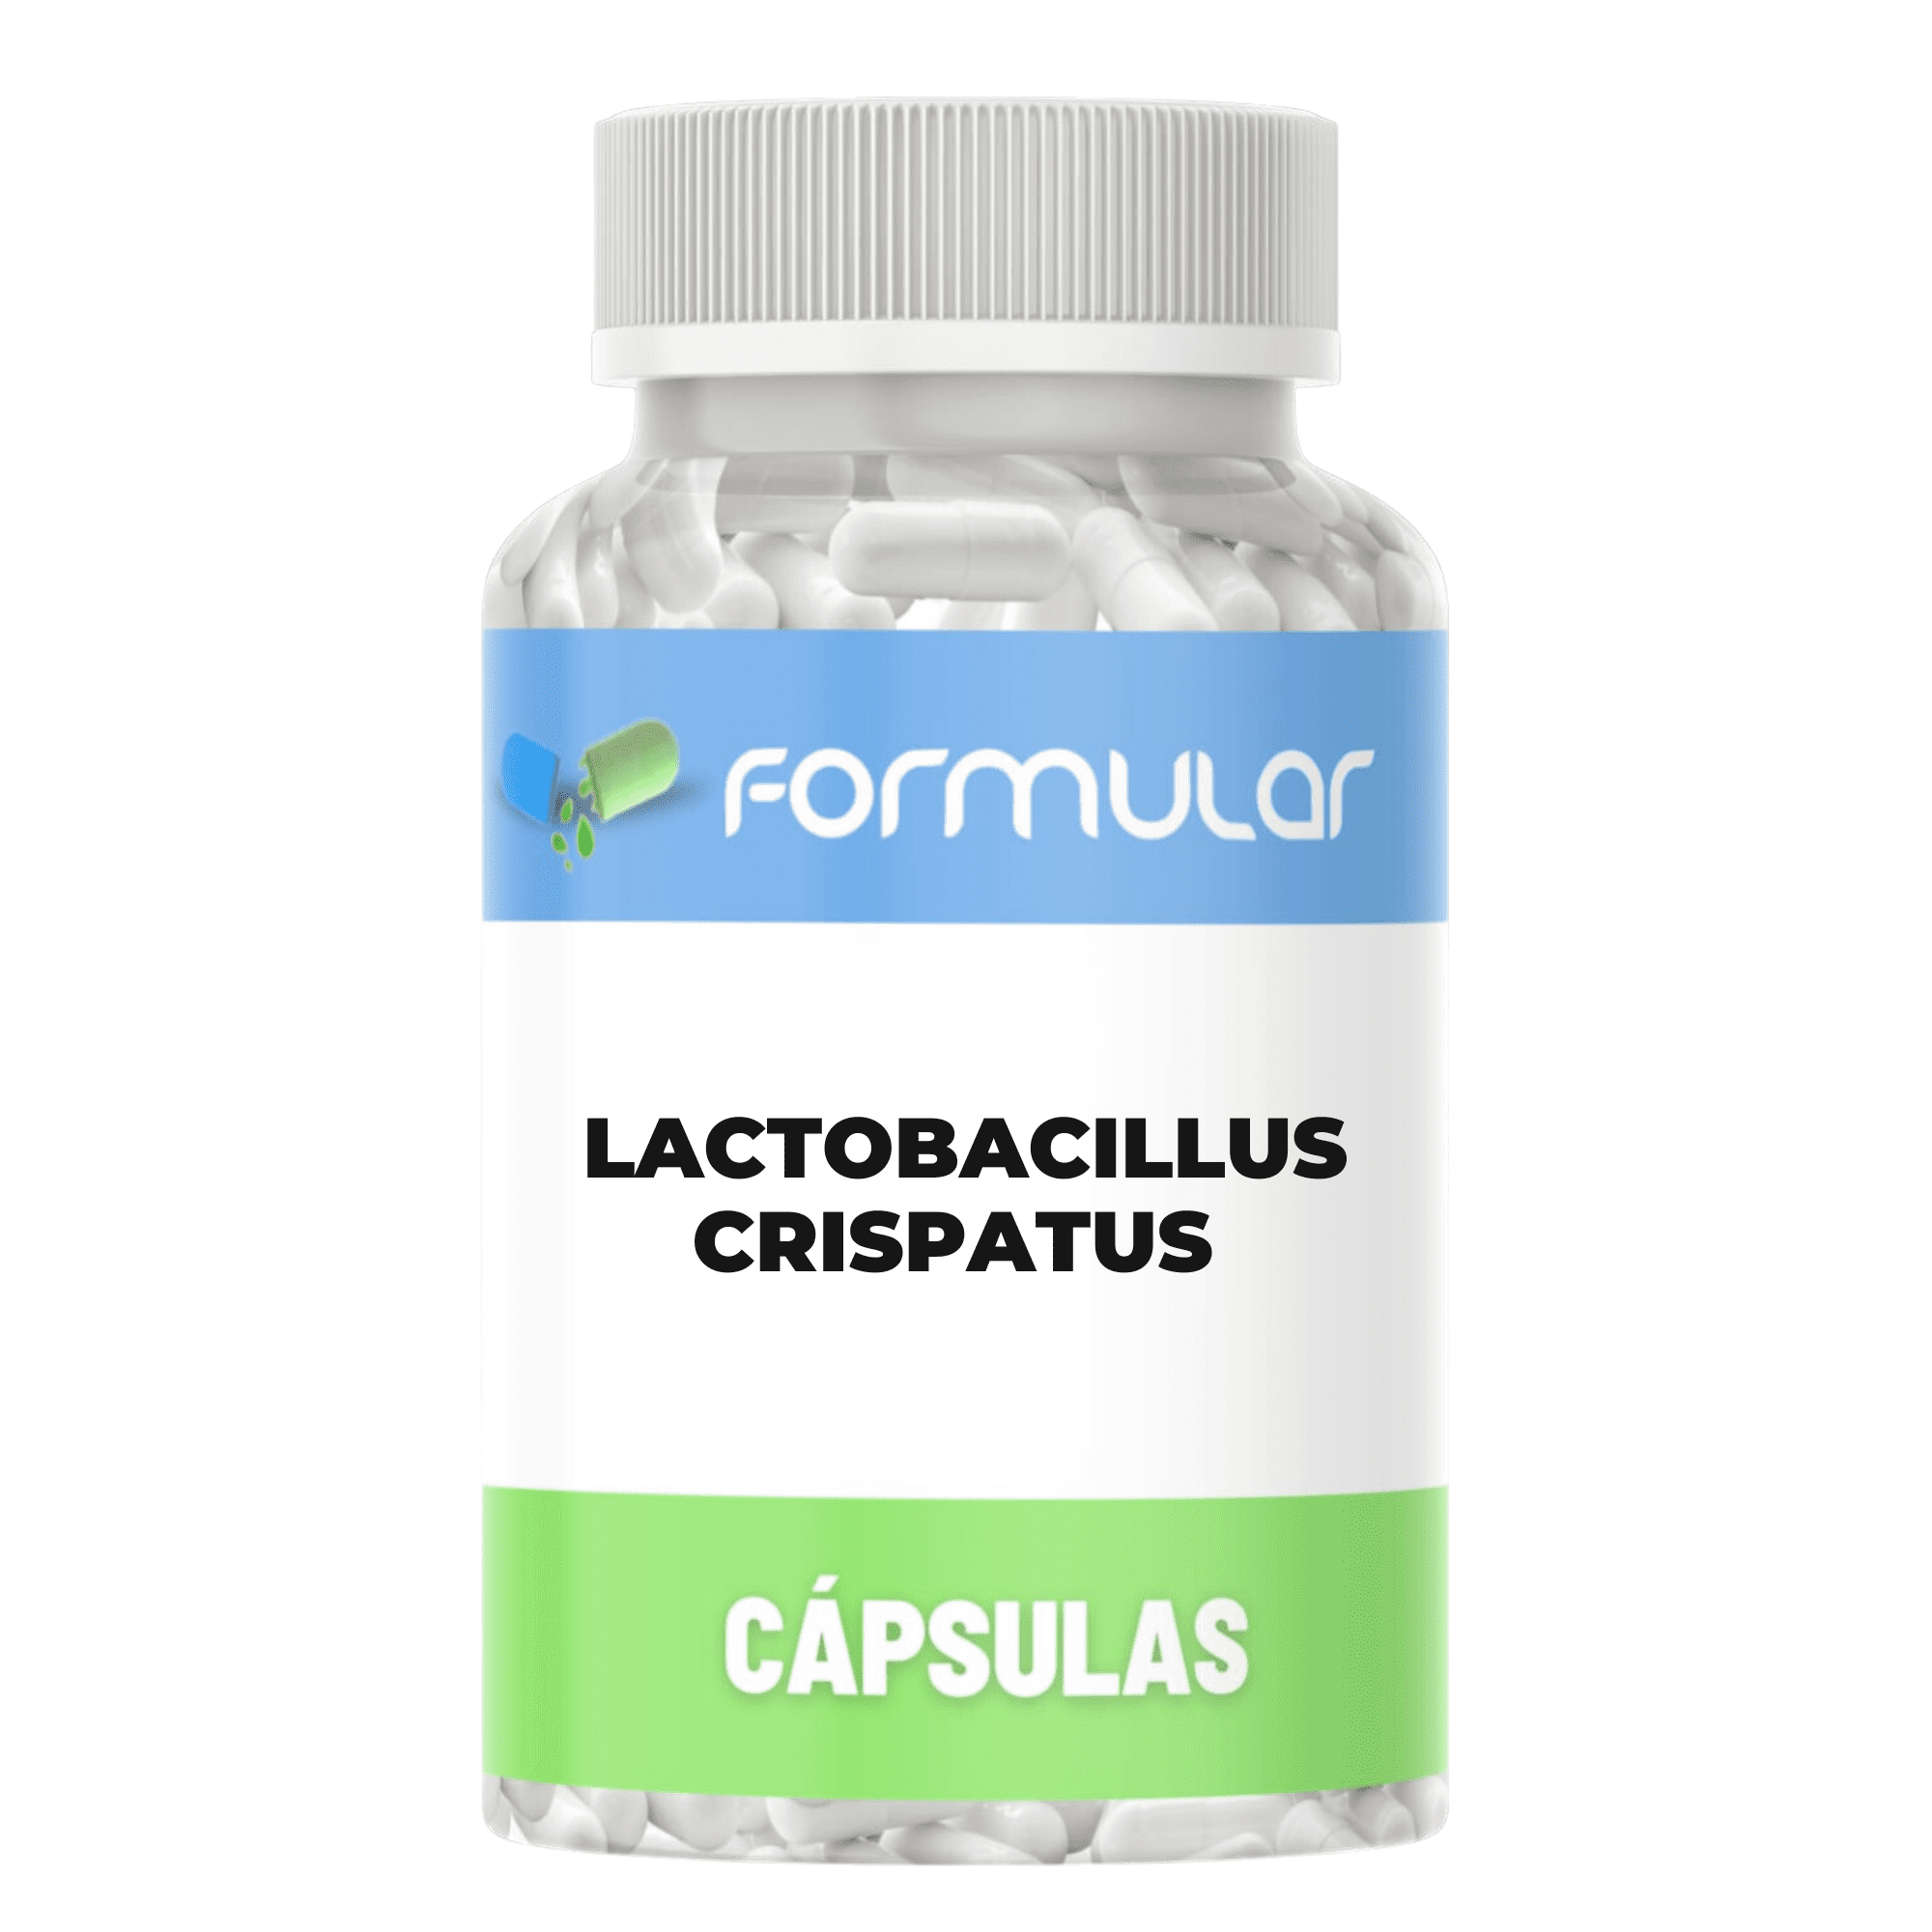 Lactobacillus Crispatus 2 bilhões - Cápsulas - Probióticos - Saúde Vaginal